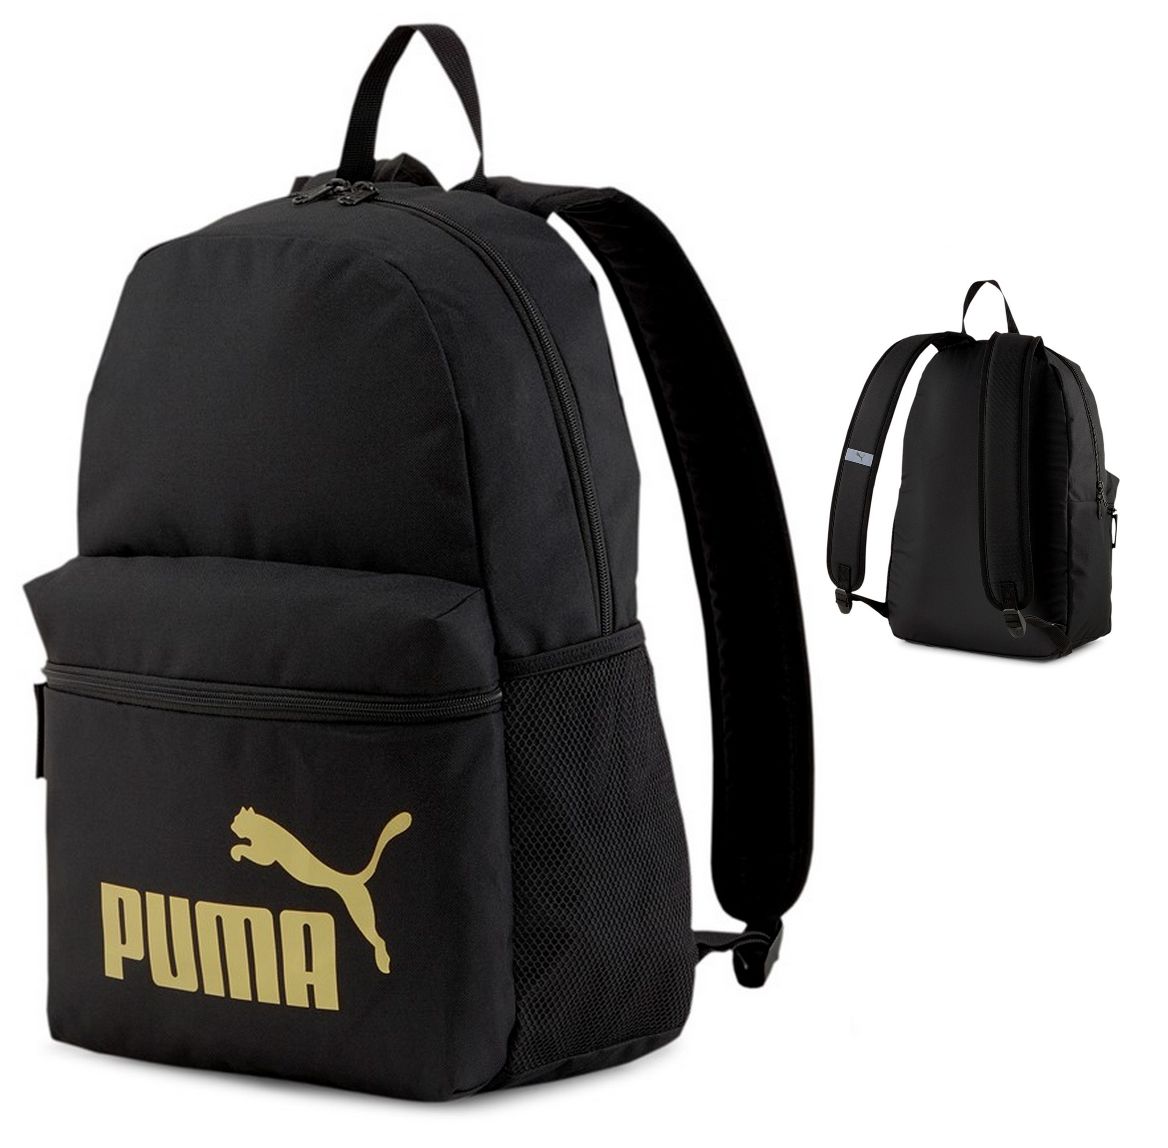 PUMA Plecak Szkolny Miejski Tornister Phase Backpack 075487 49